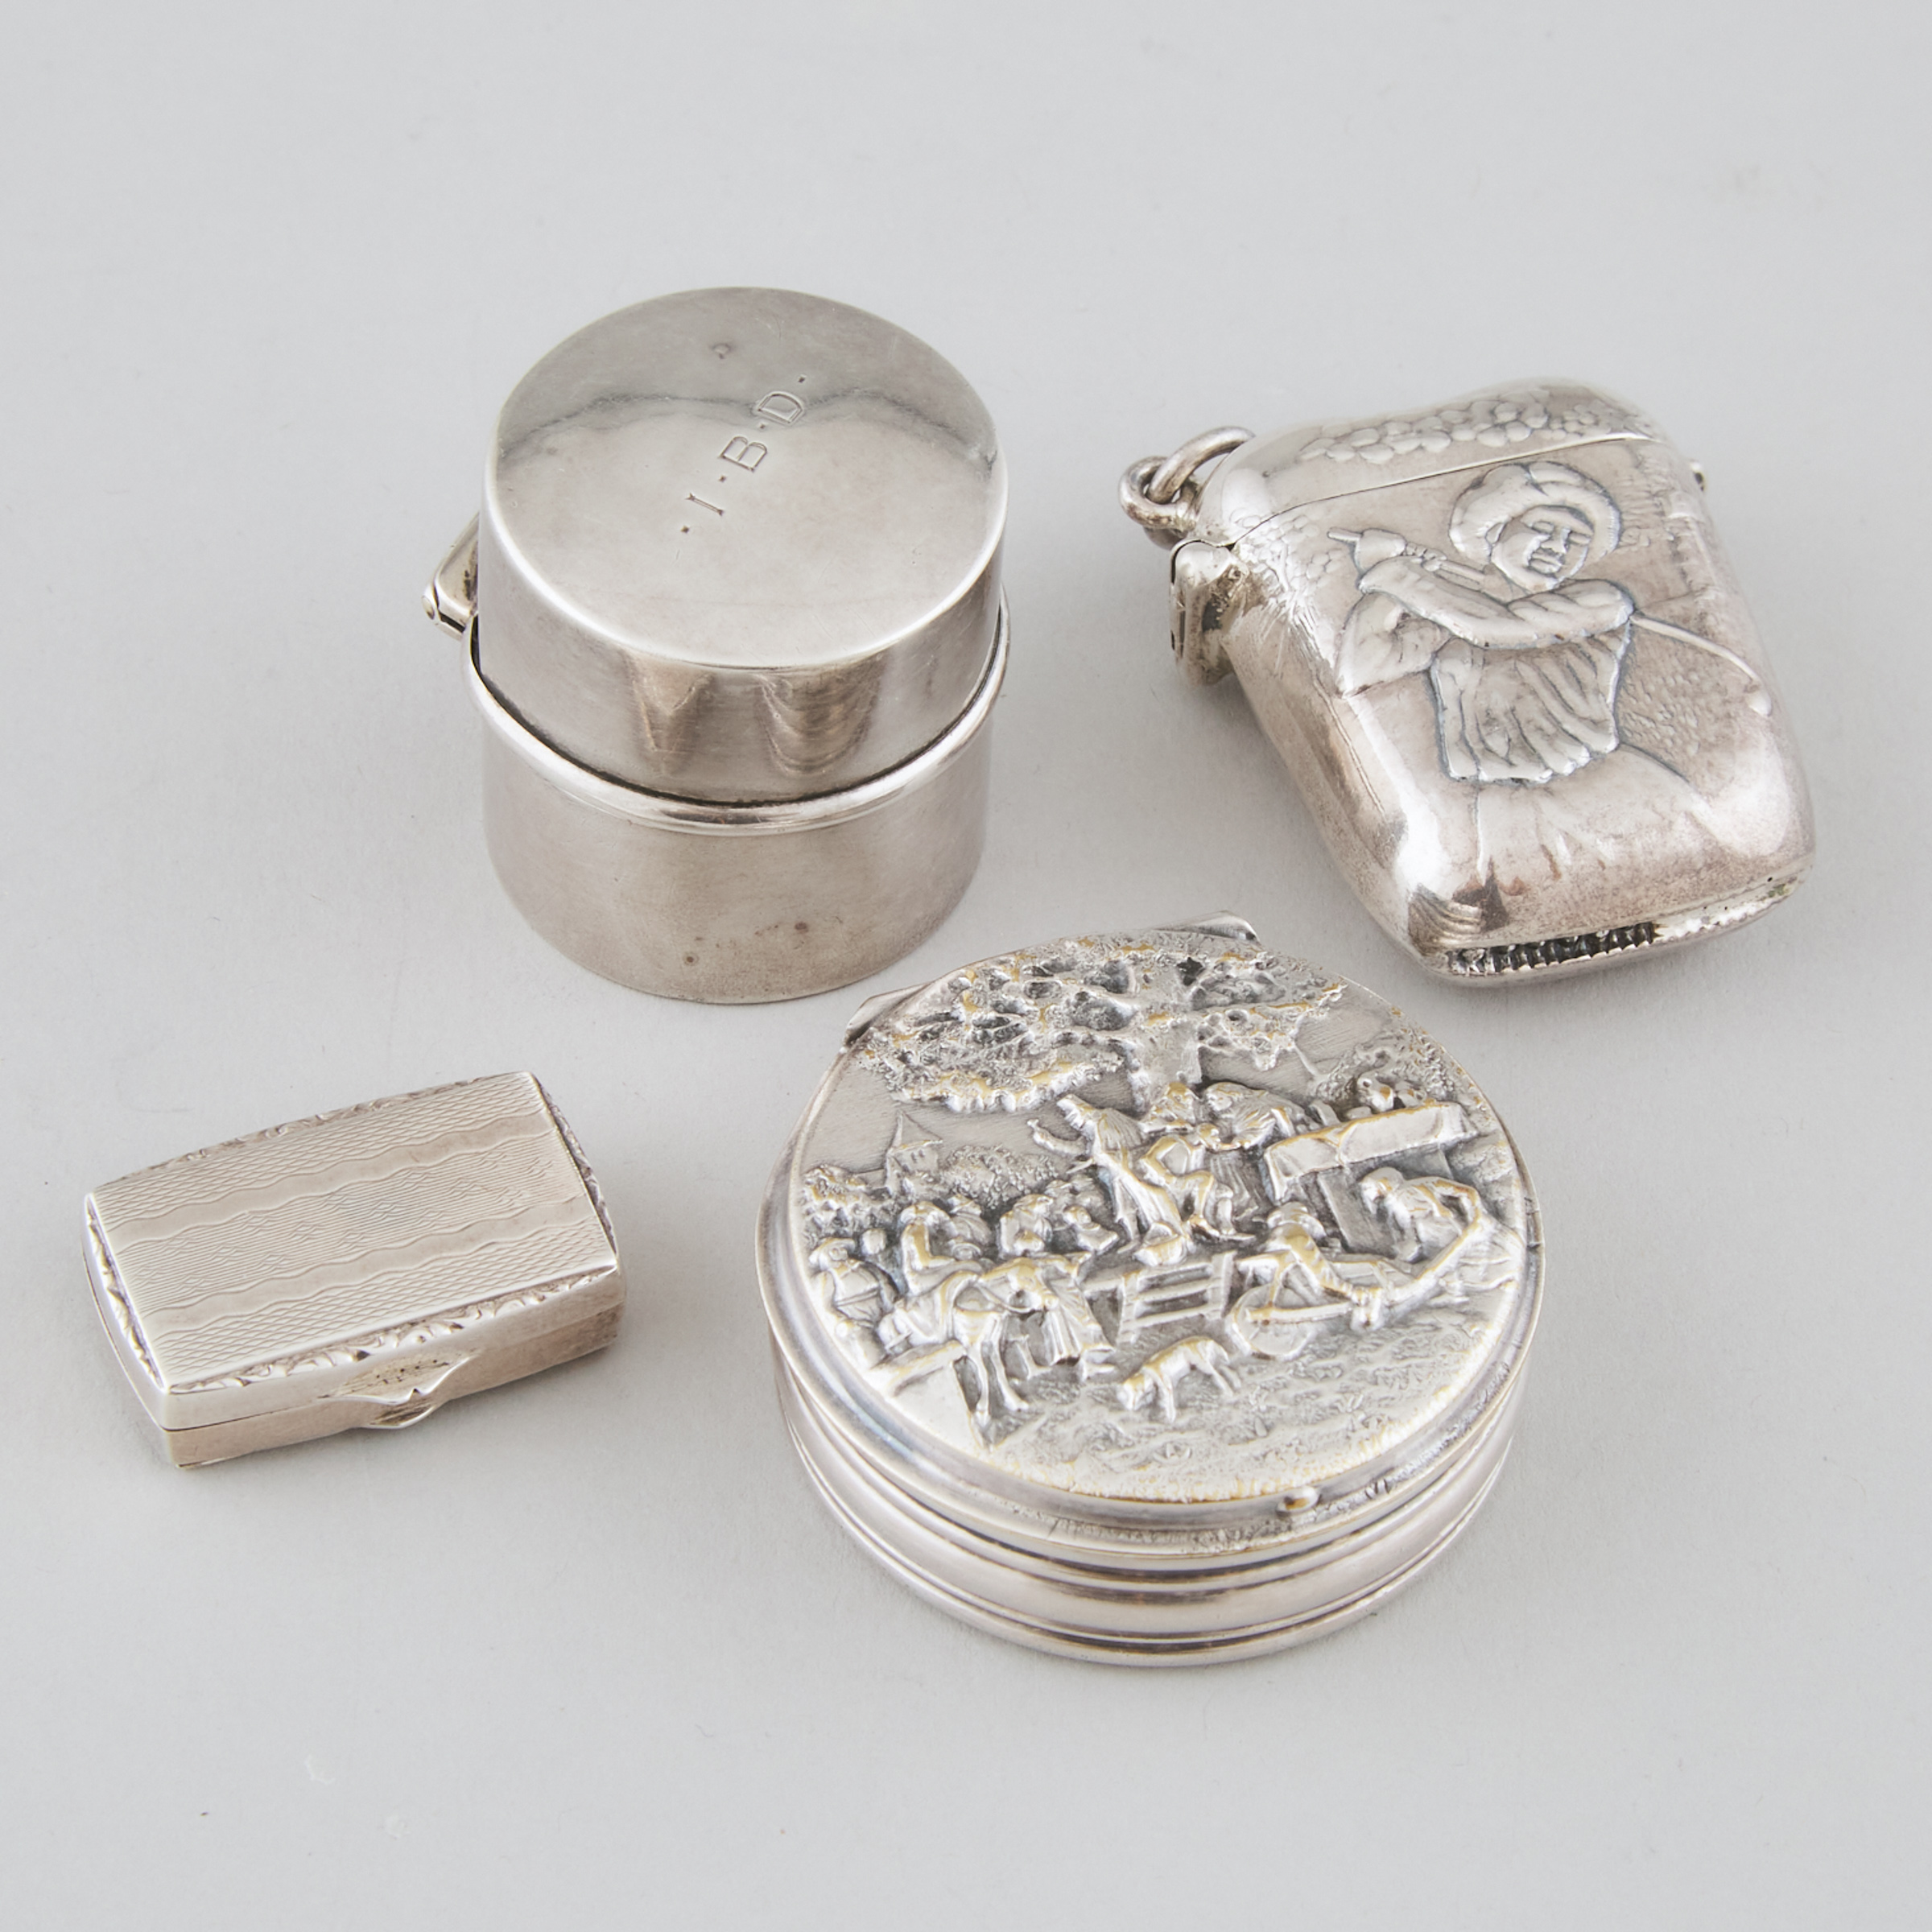 American Silver Lady Golfer Vesta Case, Edwardian Ring Box, Continental Pill Box, and a Danish Silver Plated Circular Box, late 19th/20th century